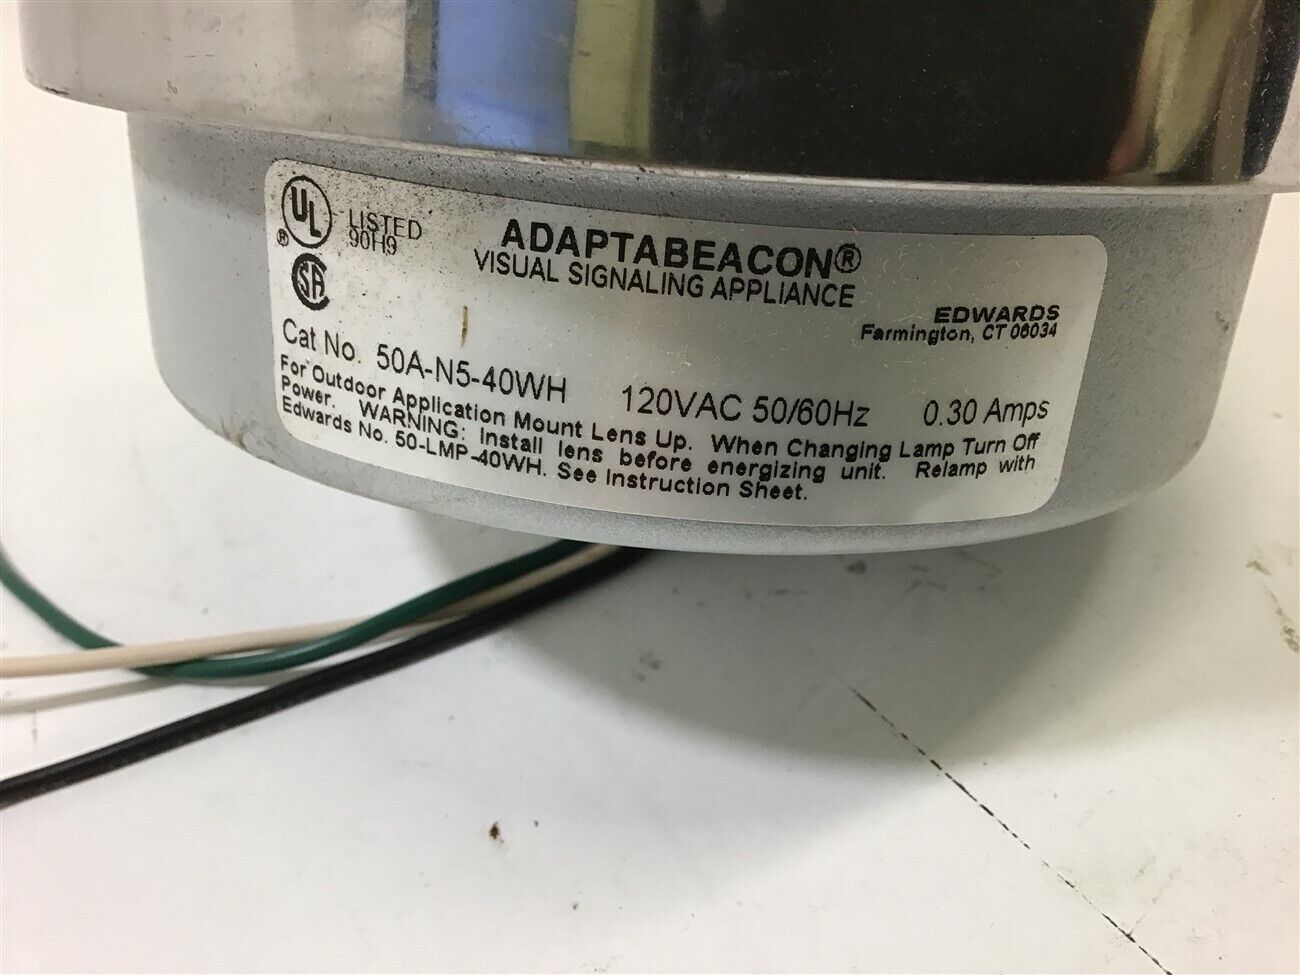 Edwards Adaptabeacon 50A-N5-40Wh Visual Signaling Appliance 120 Vac